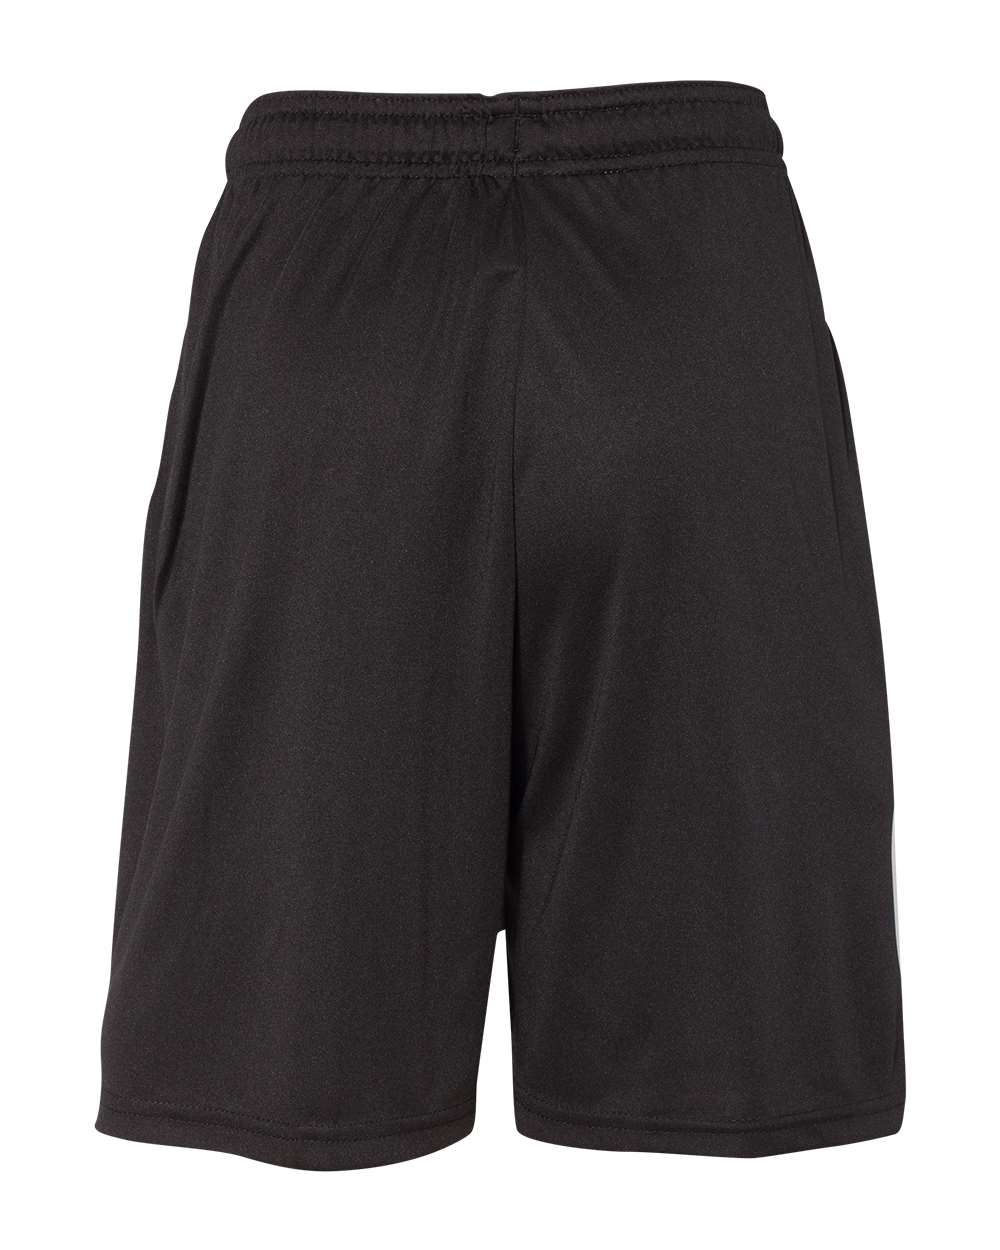 Russell Athletic Basic Cotton Pocket Shorts, Black Heather / XL